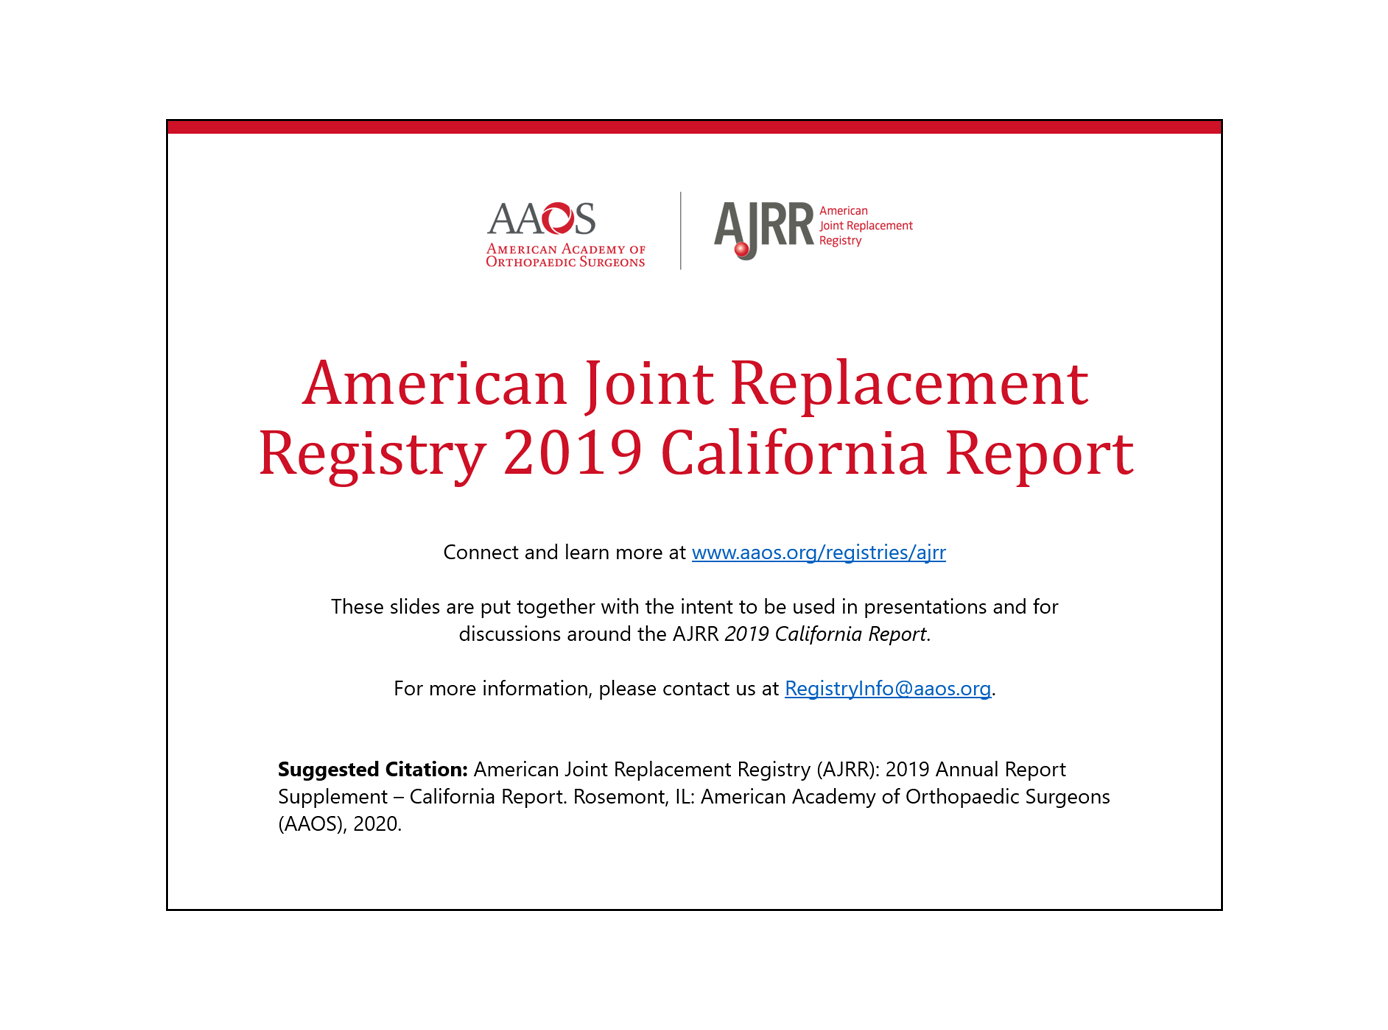 CA Report Slide